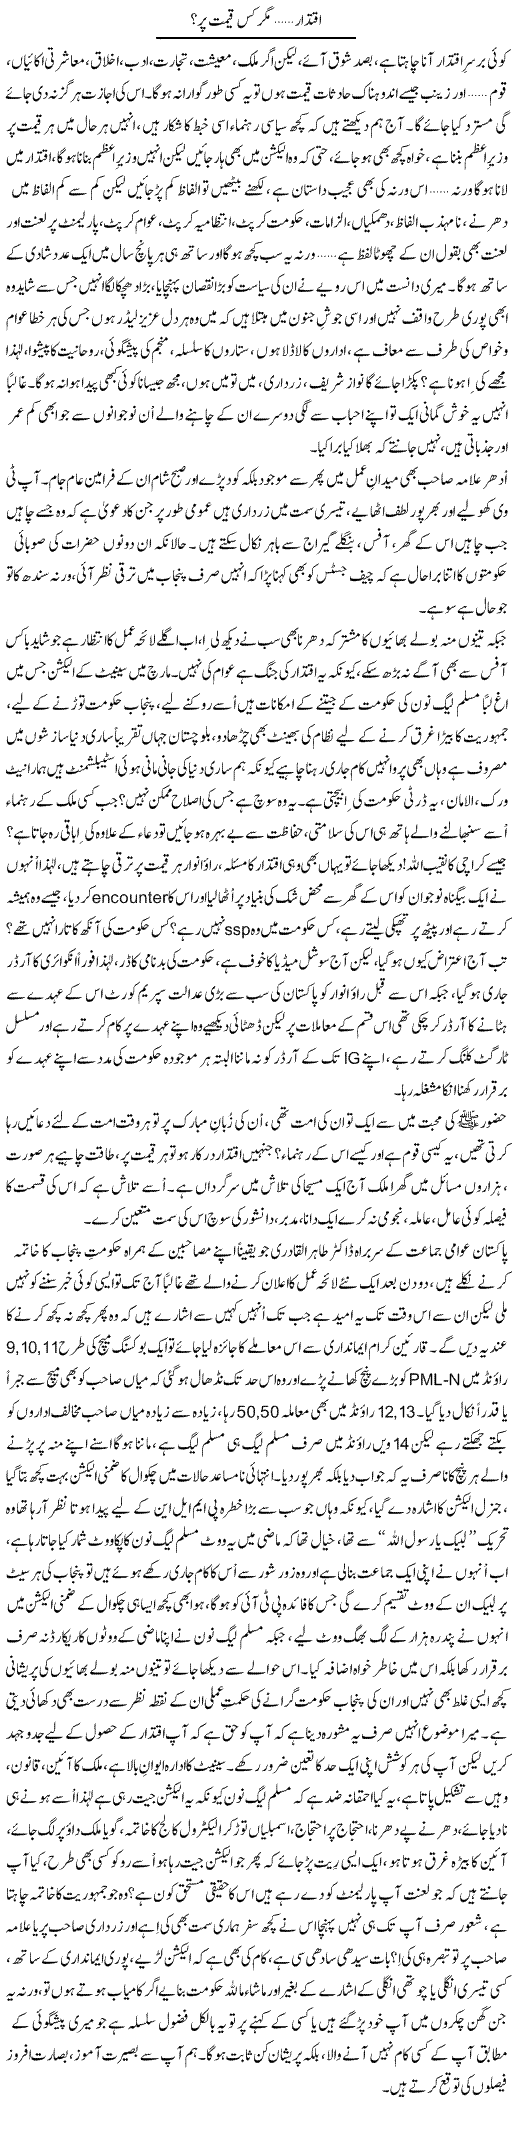 Iqtidar Magar Kis Qeemat Par? | Rao Saif U Zaman | Daily Urdu Columns